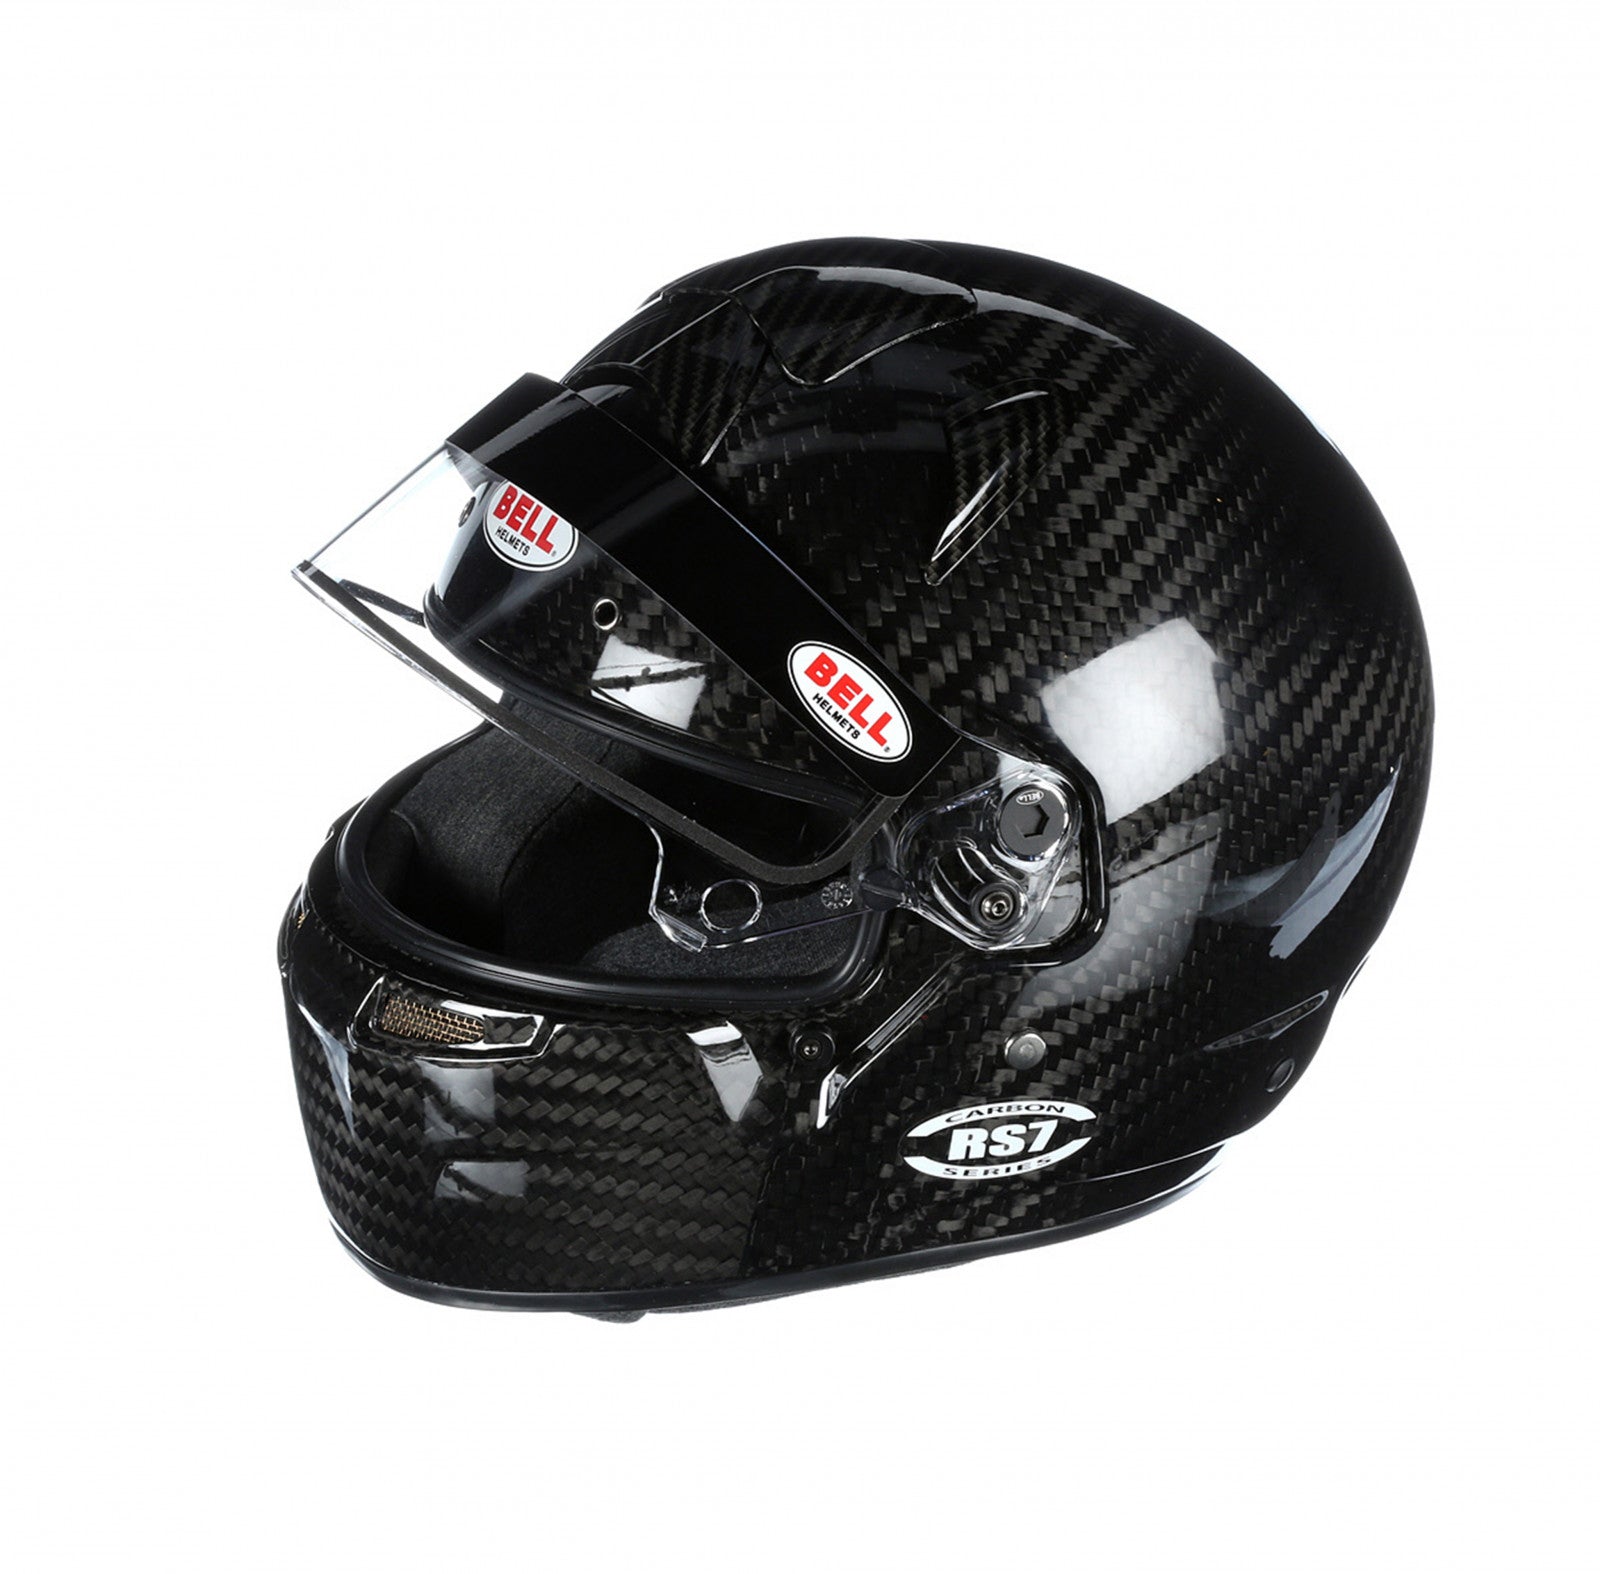 Bell RS7 Carbon Helmet Size 60 cm